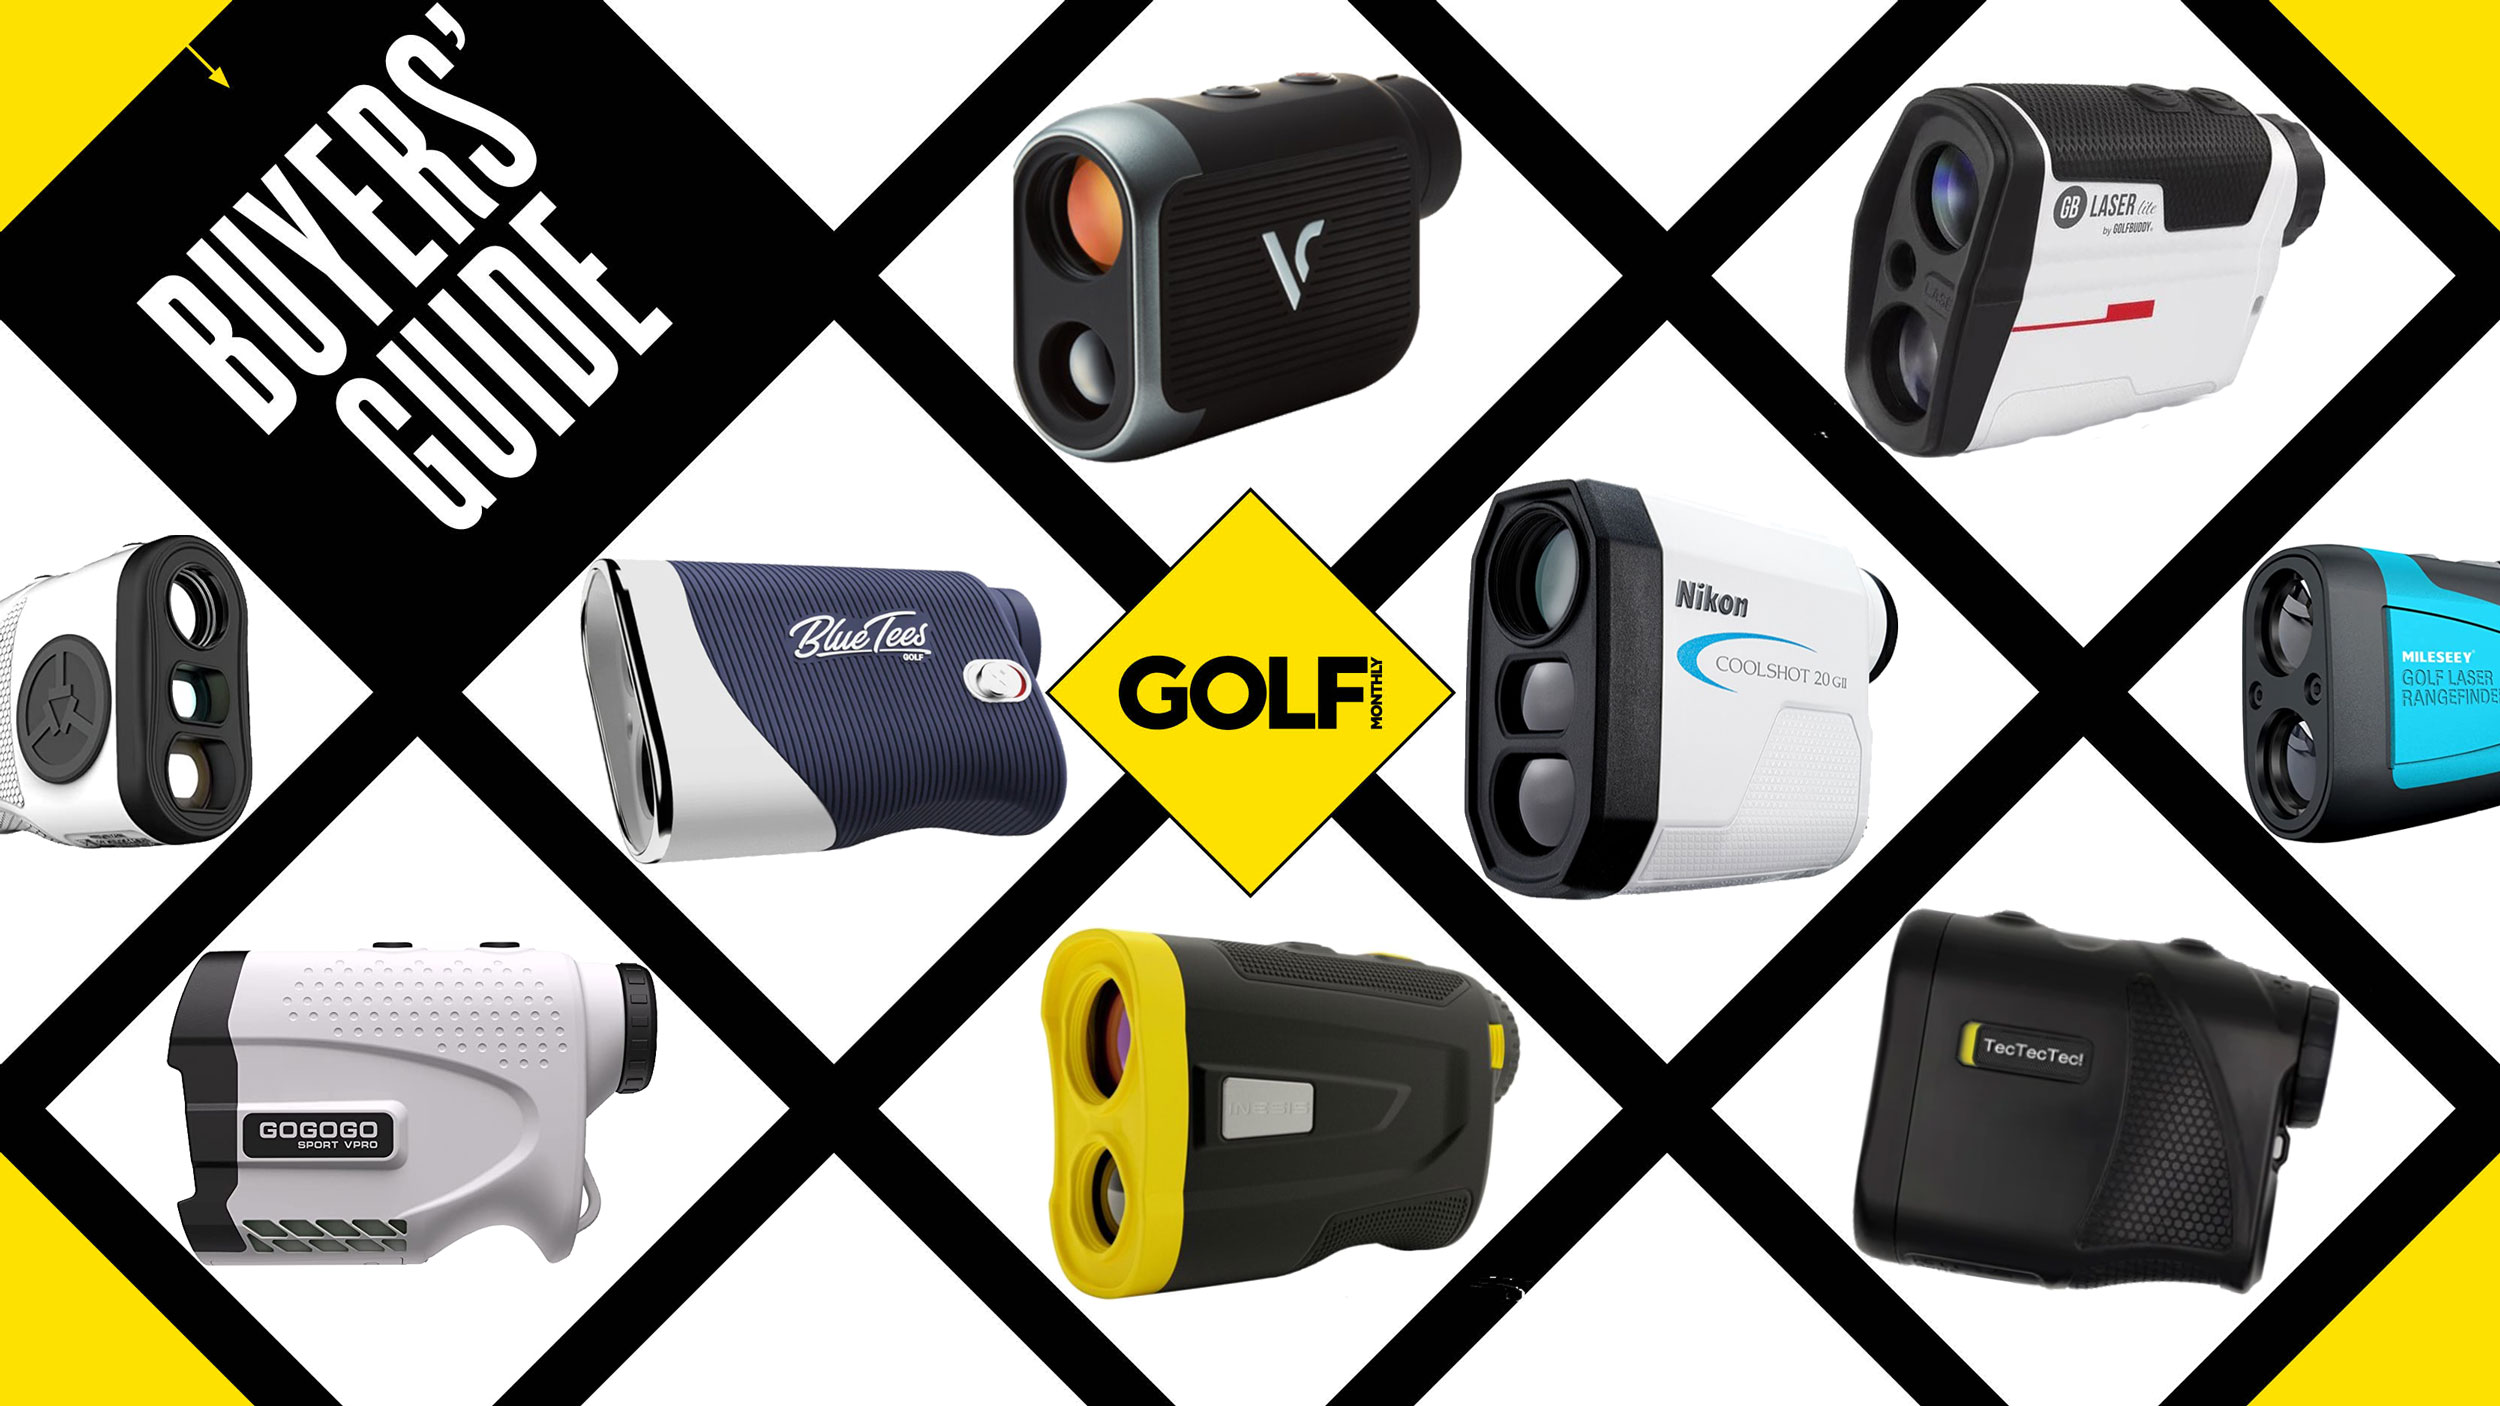 Golf rangefinders under $200: Our top 4 picks